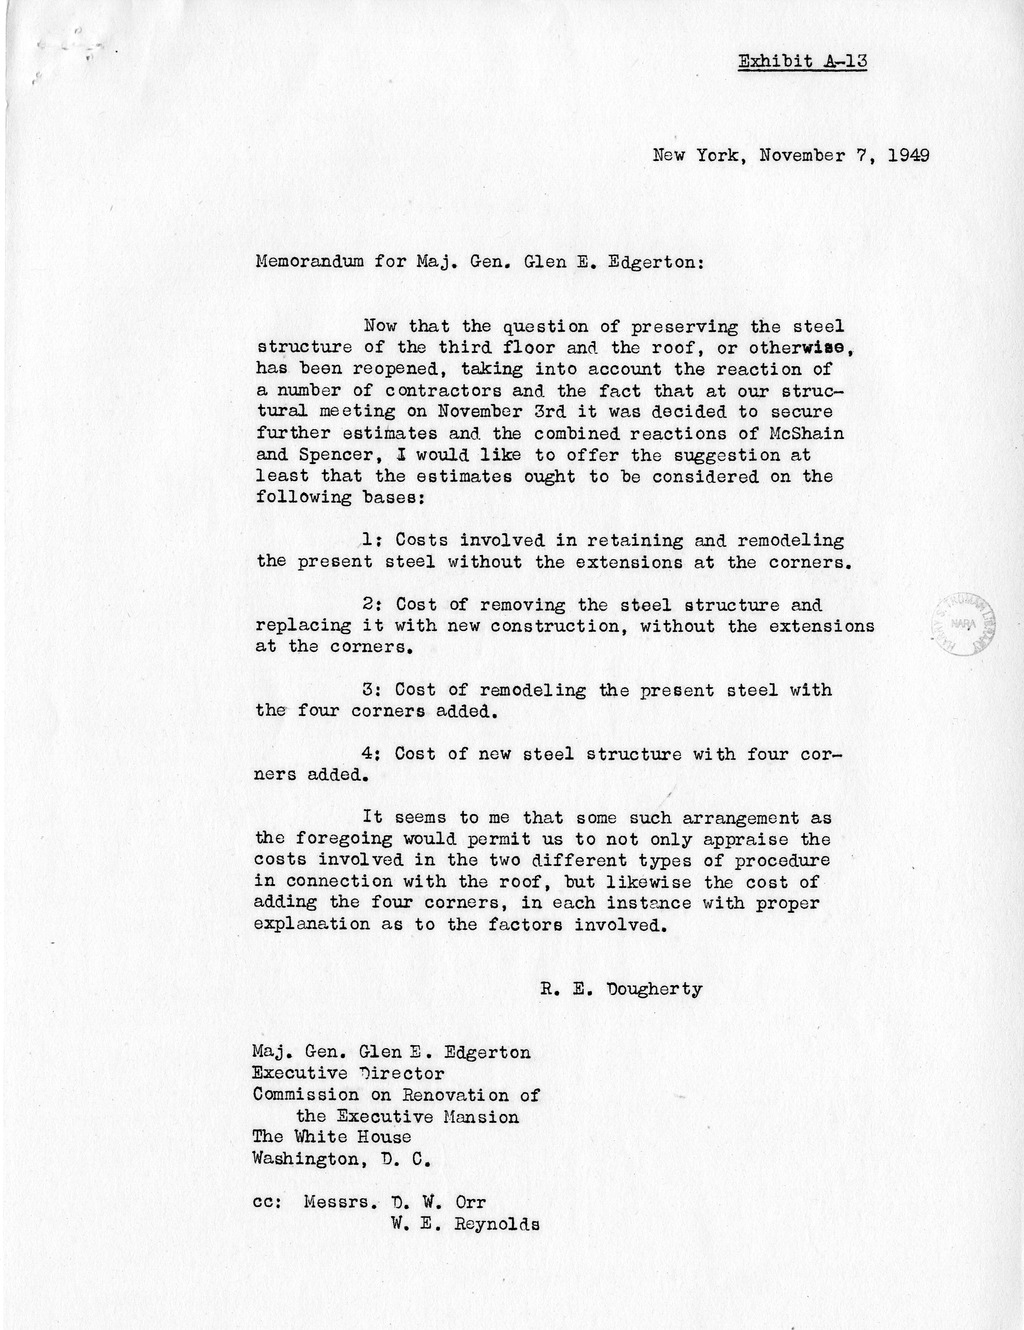 Memorandum from R. E. Dougherty to Major General Glen E. Edgerton with Attachments